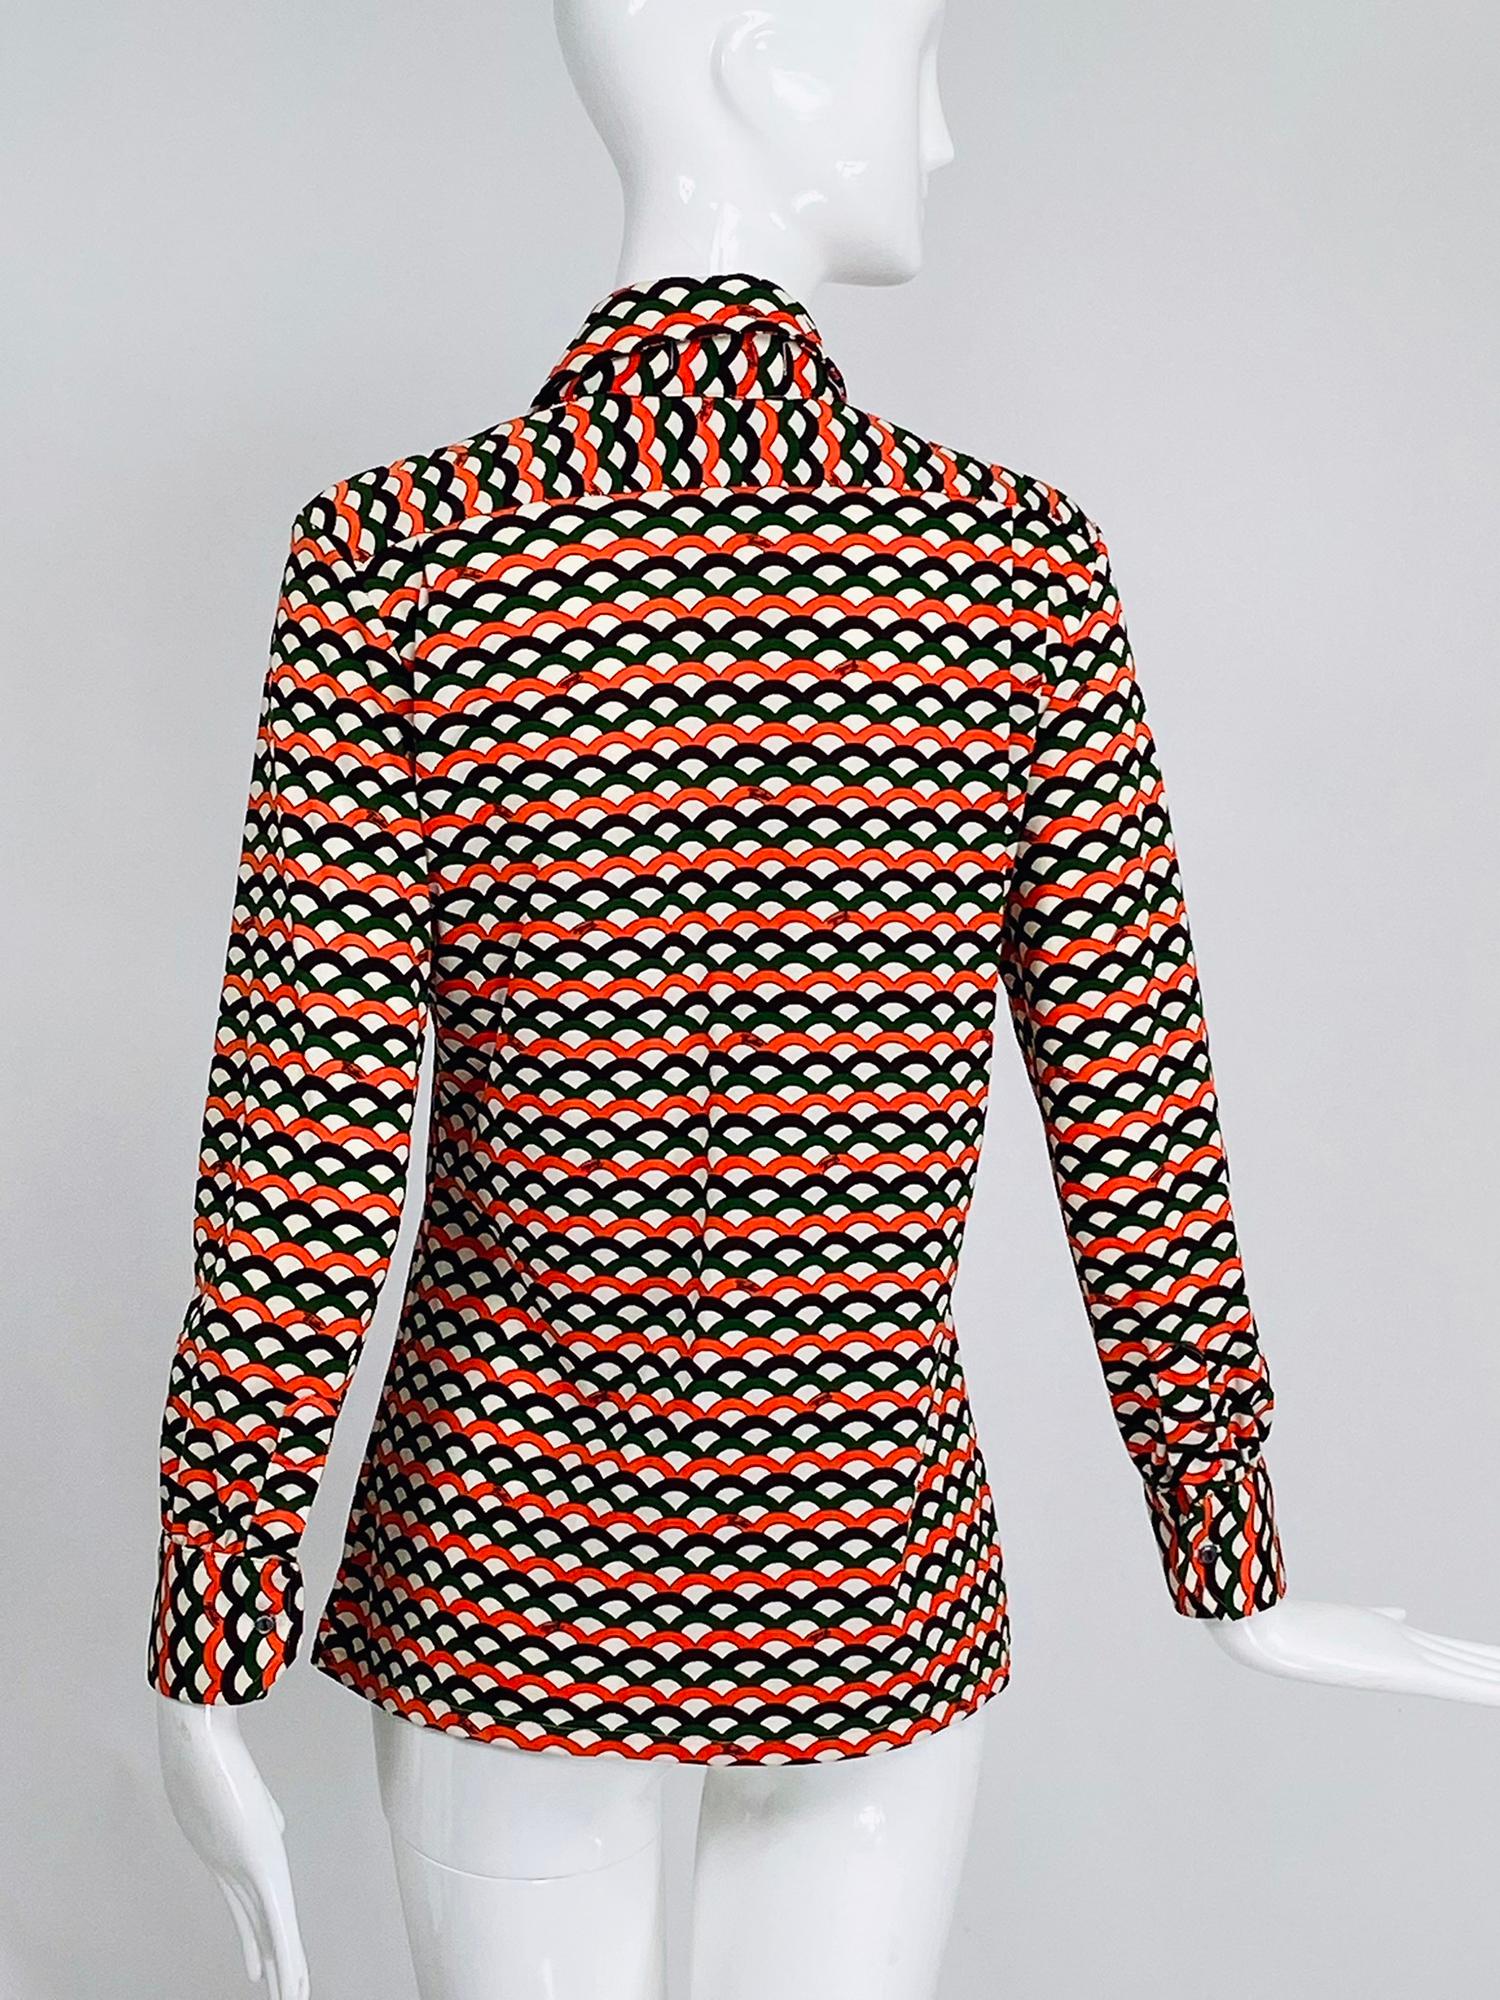 Women's Emilio Pucci Signed Geometric Print Shirt 1970s